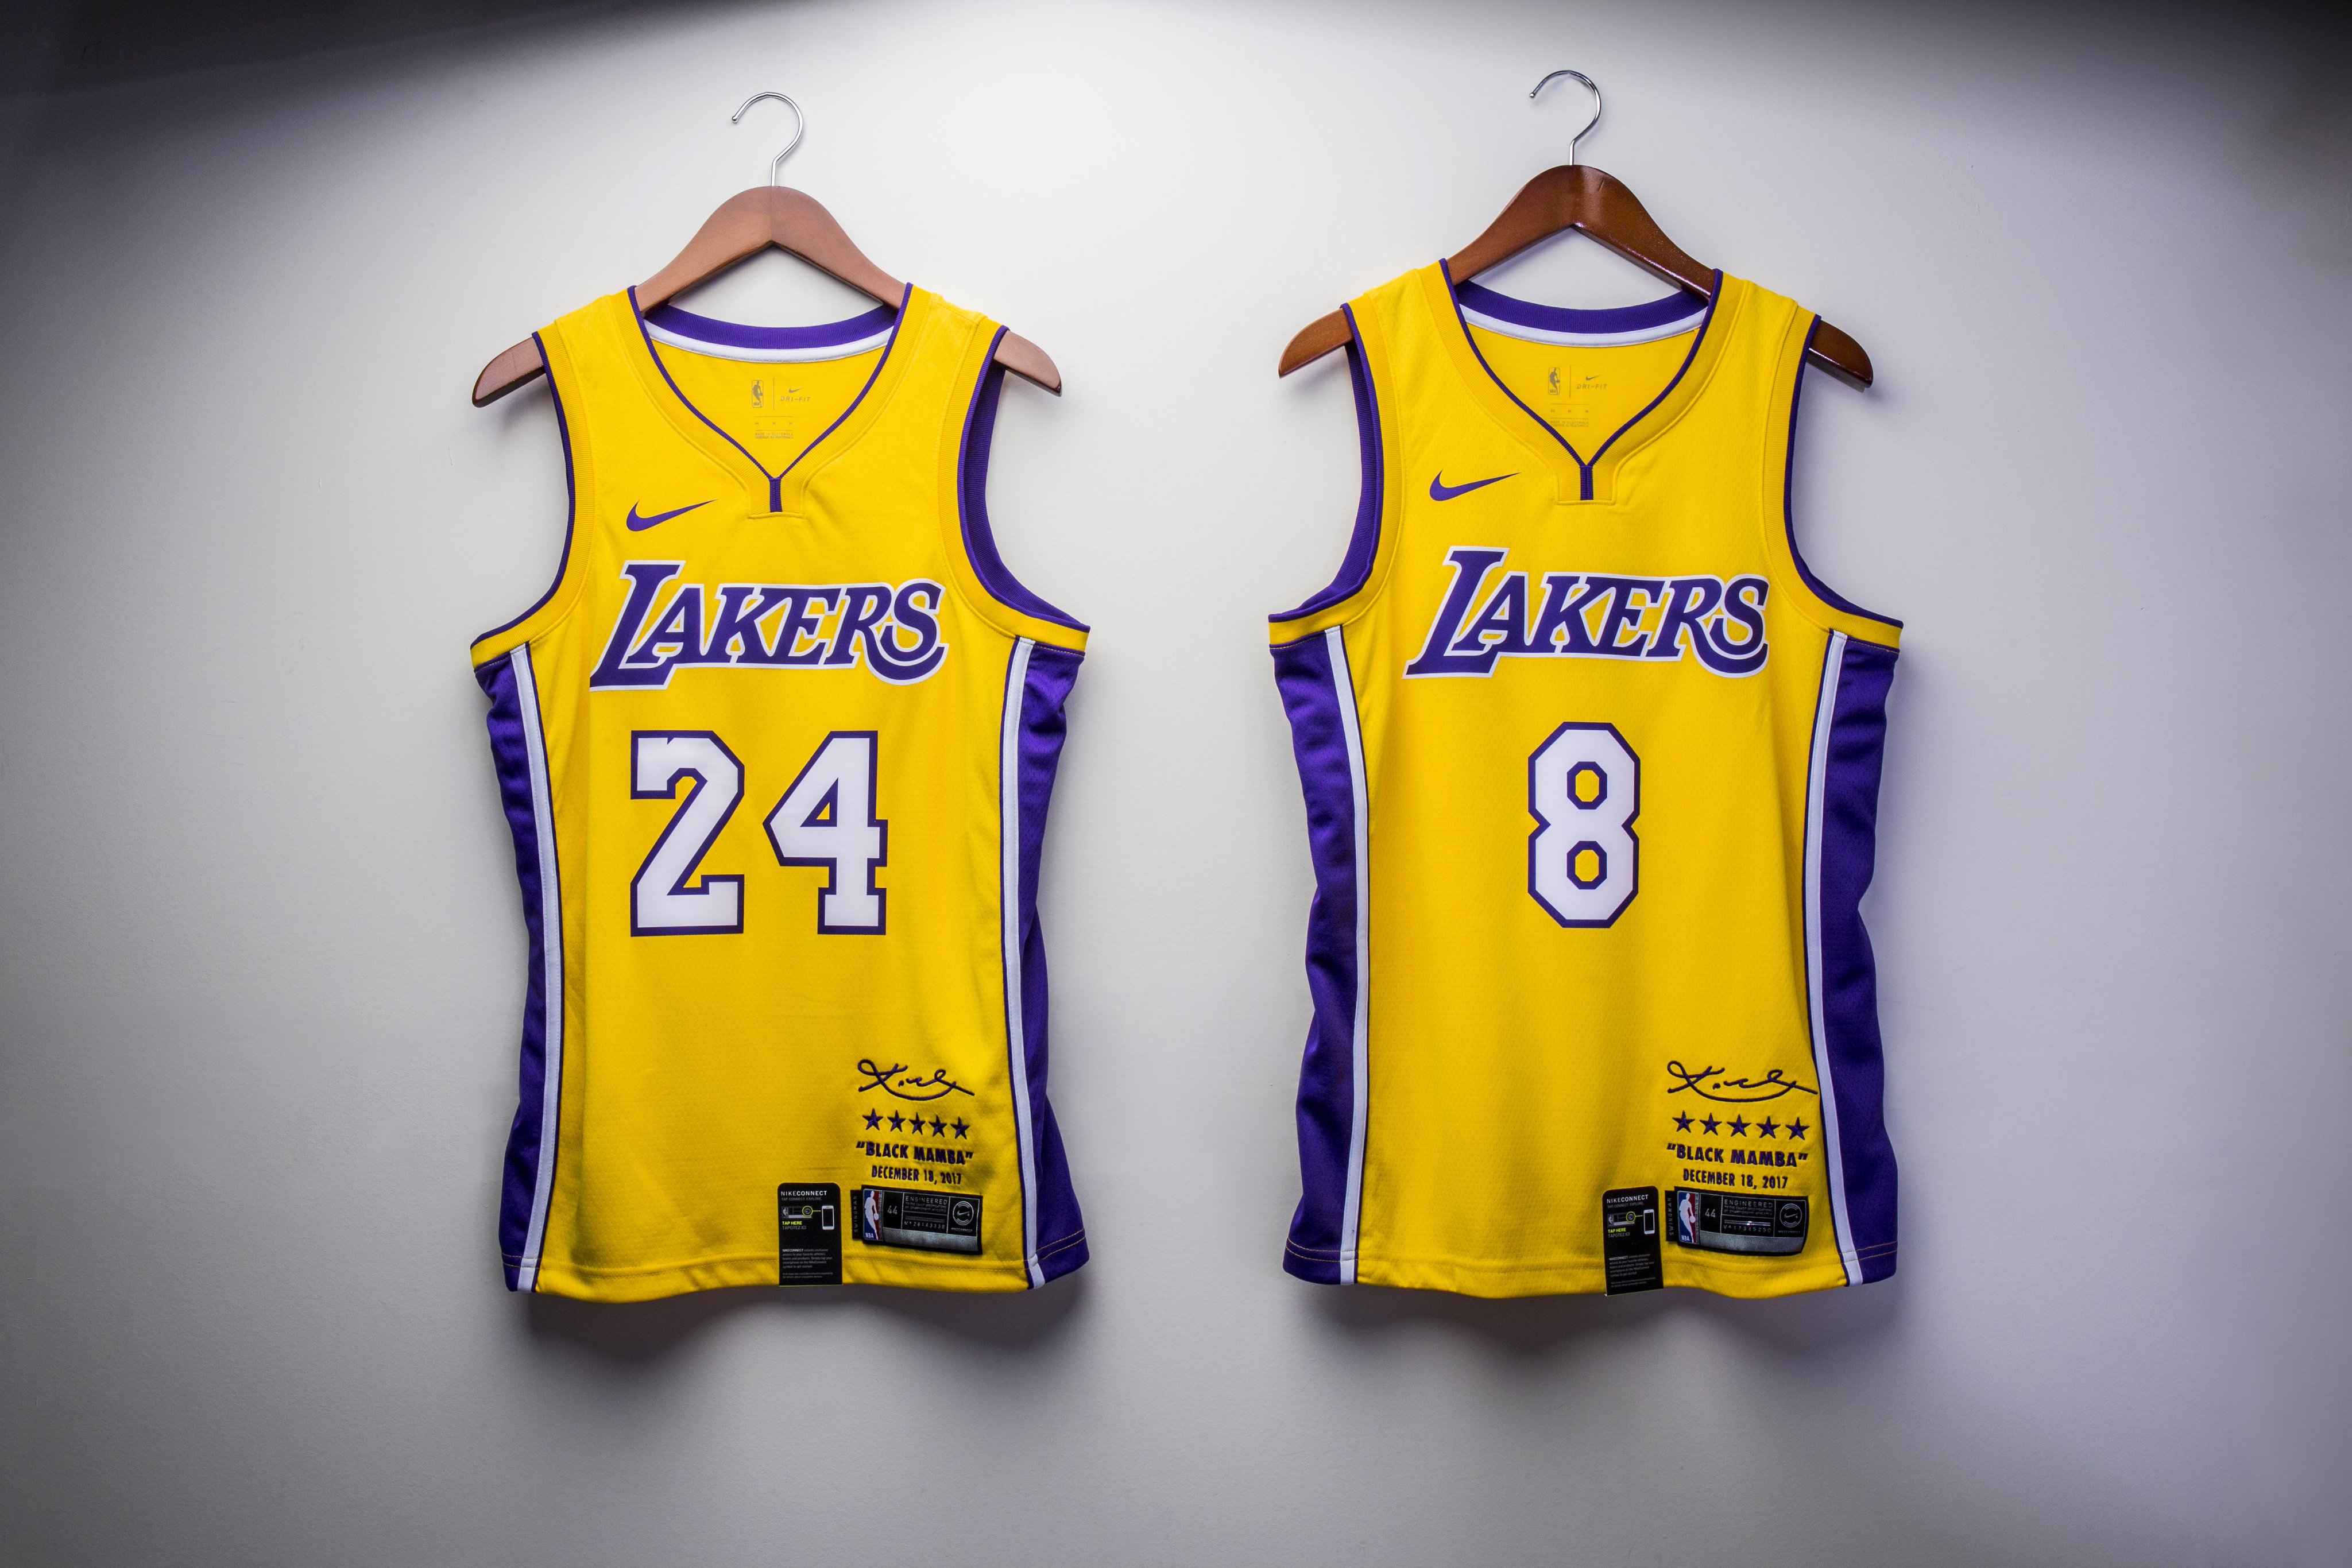 ShoePalace.com no Twitter: "Limited Nike x Lakers Bryant retirement jerseys https://t.co/6qnpgD4kWs https://t.co/J31GWTSvfu" / Twitter